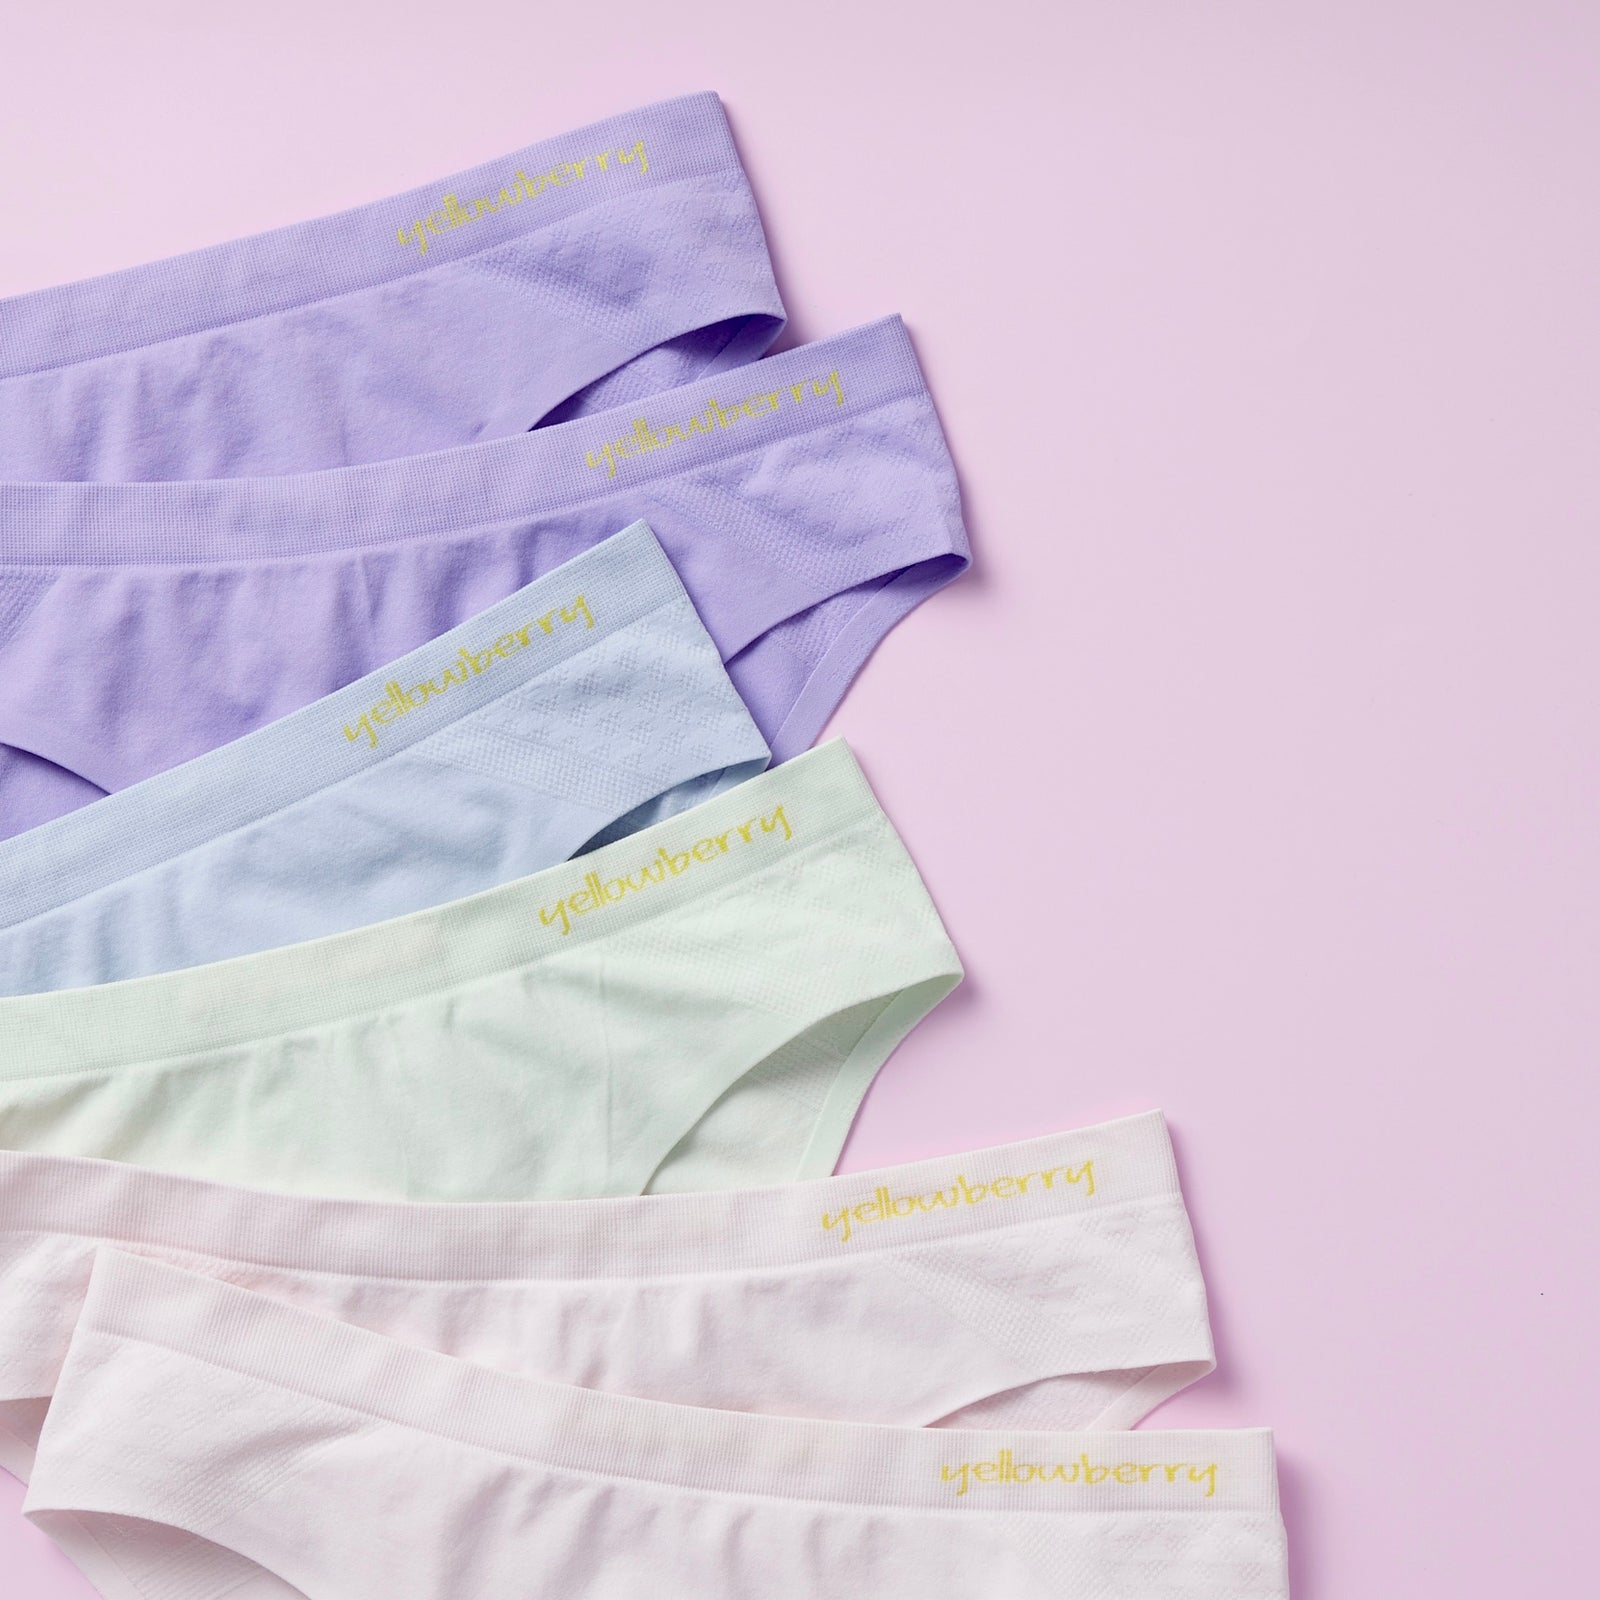  Teen Girls Underwear Cotton Briefs Panties For